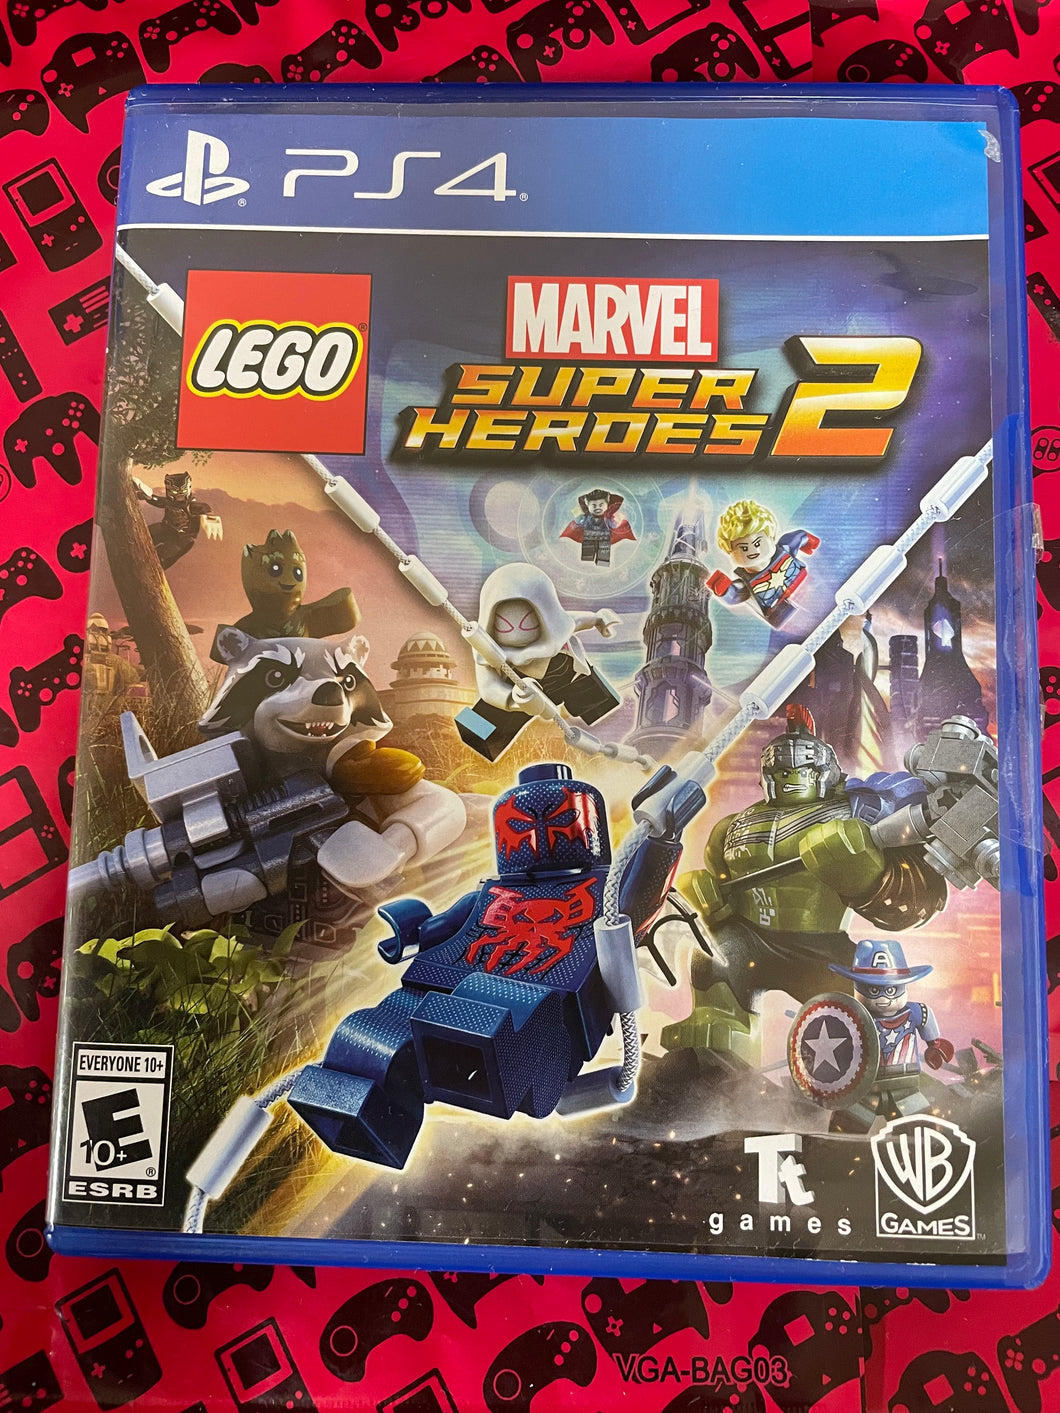 LEGO Marvel Super Heroes 2 Playstation 4